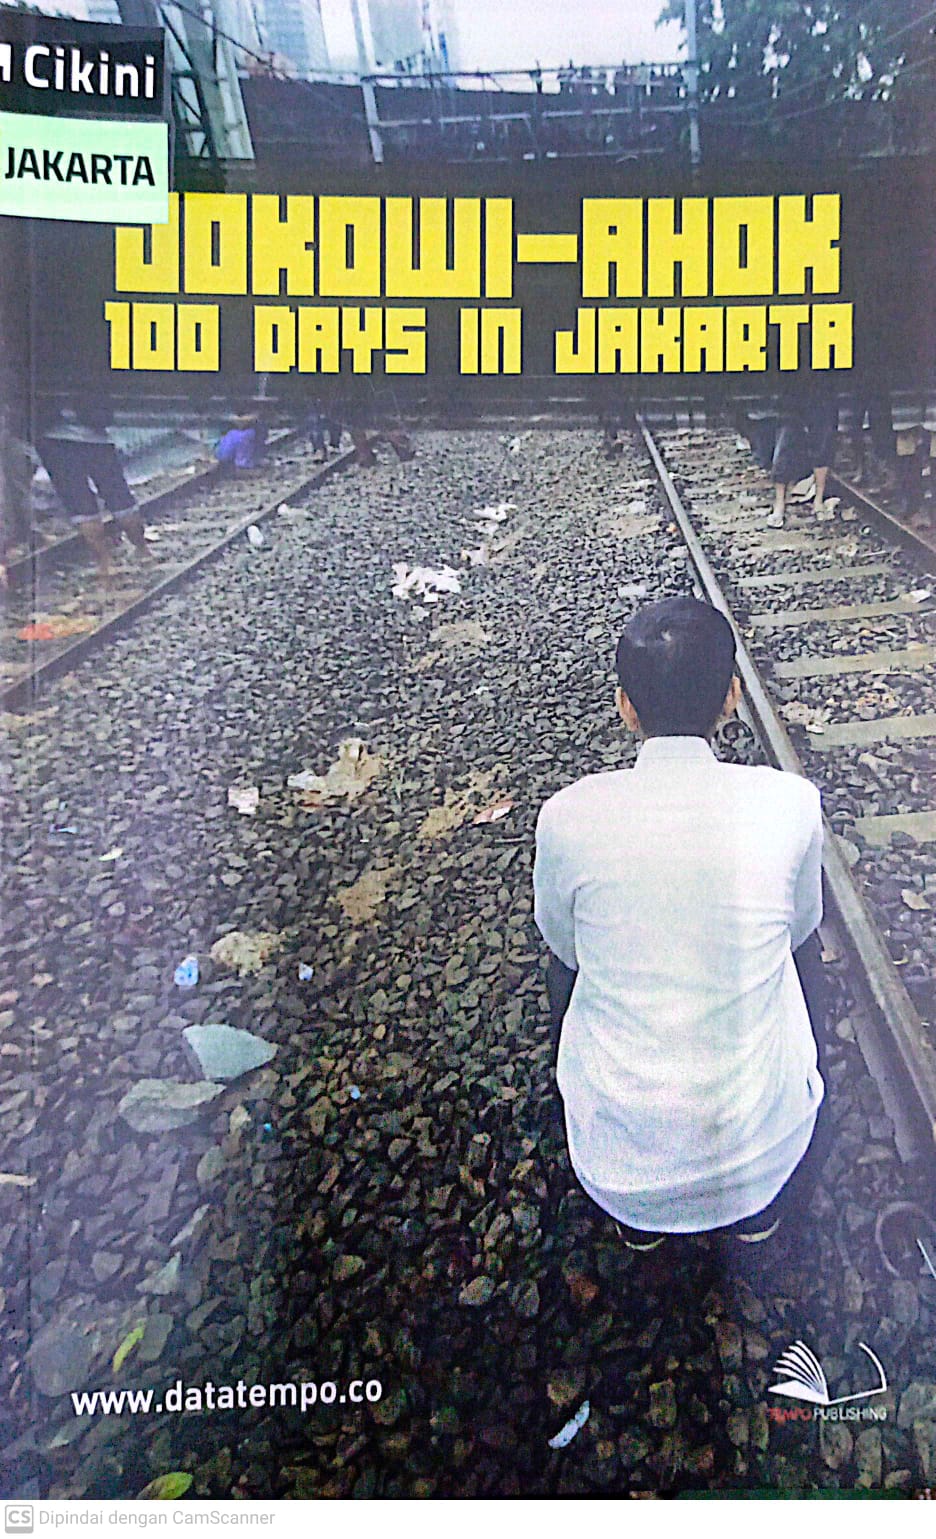 Jokowi-Ahok 100 days in Jakarta